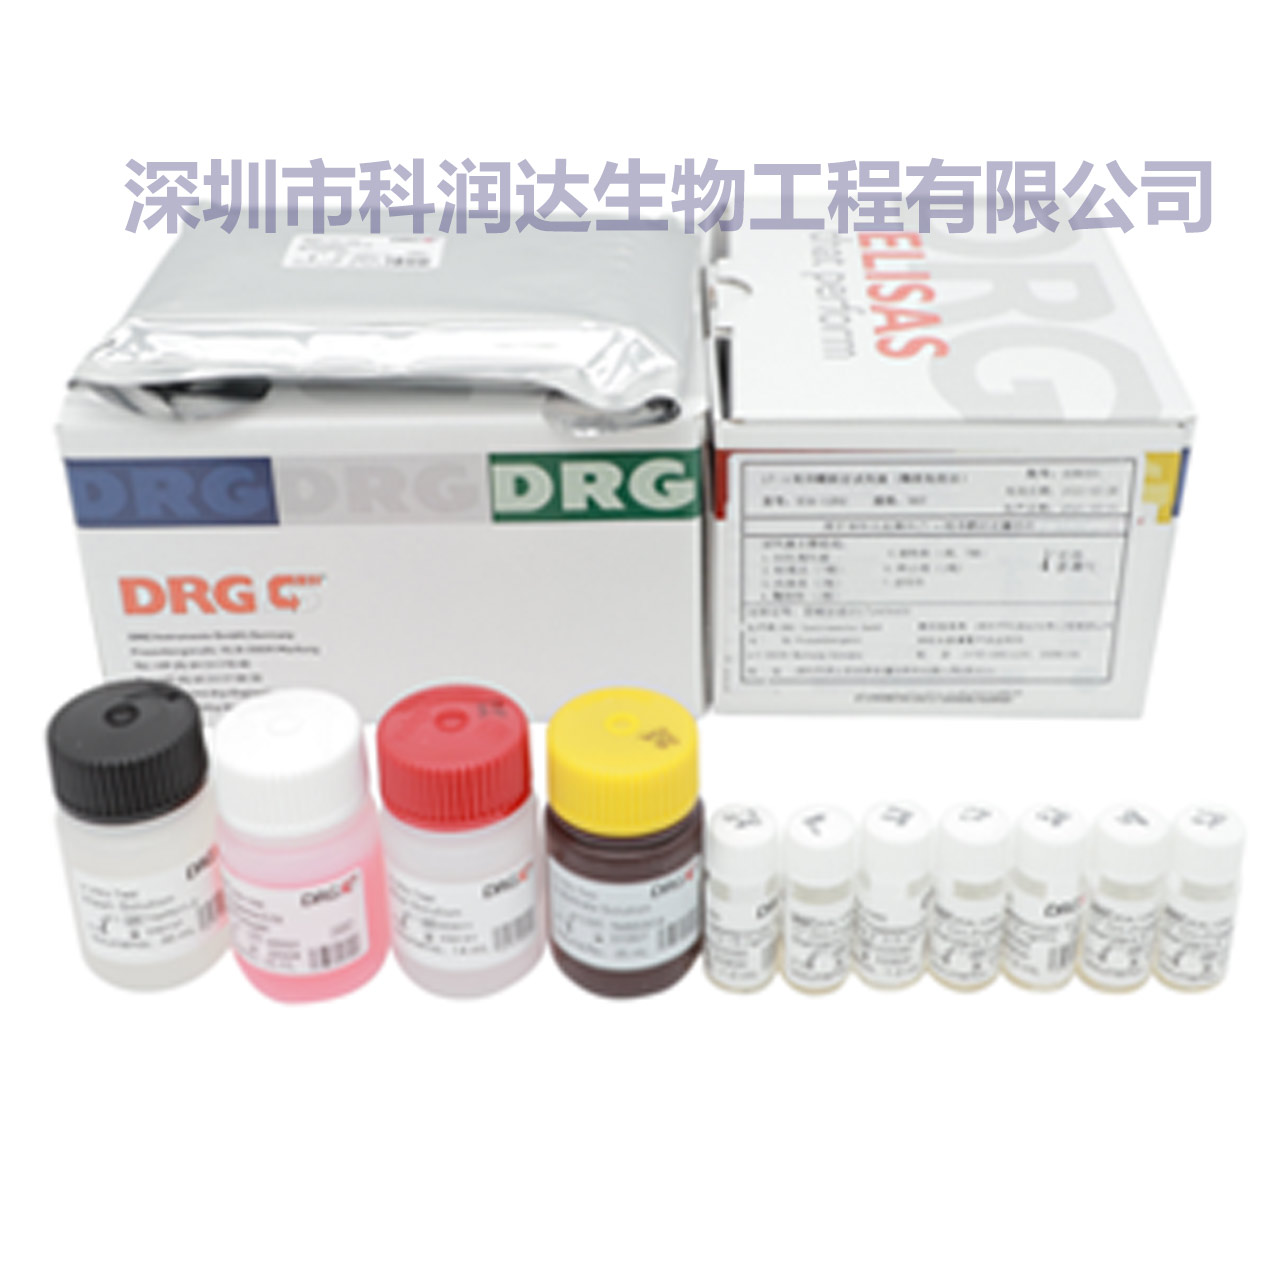 DRG试剂盒